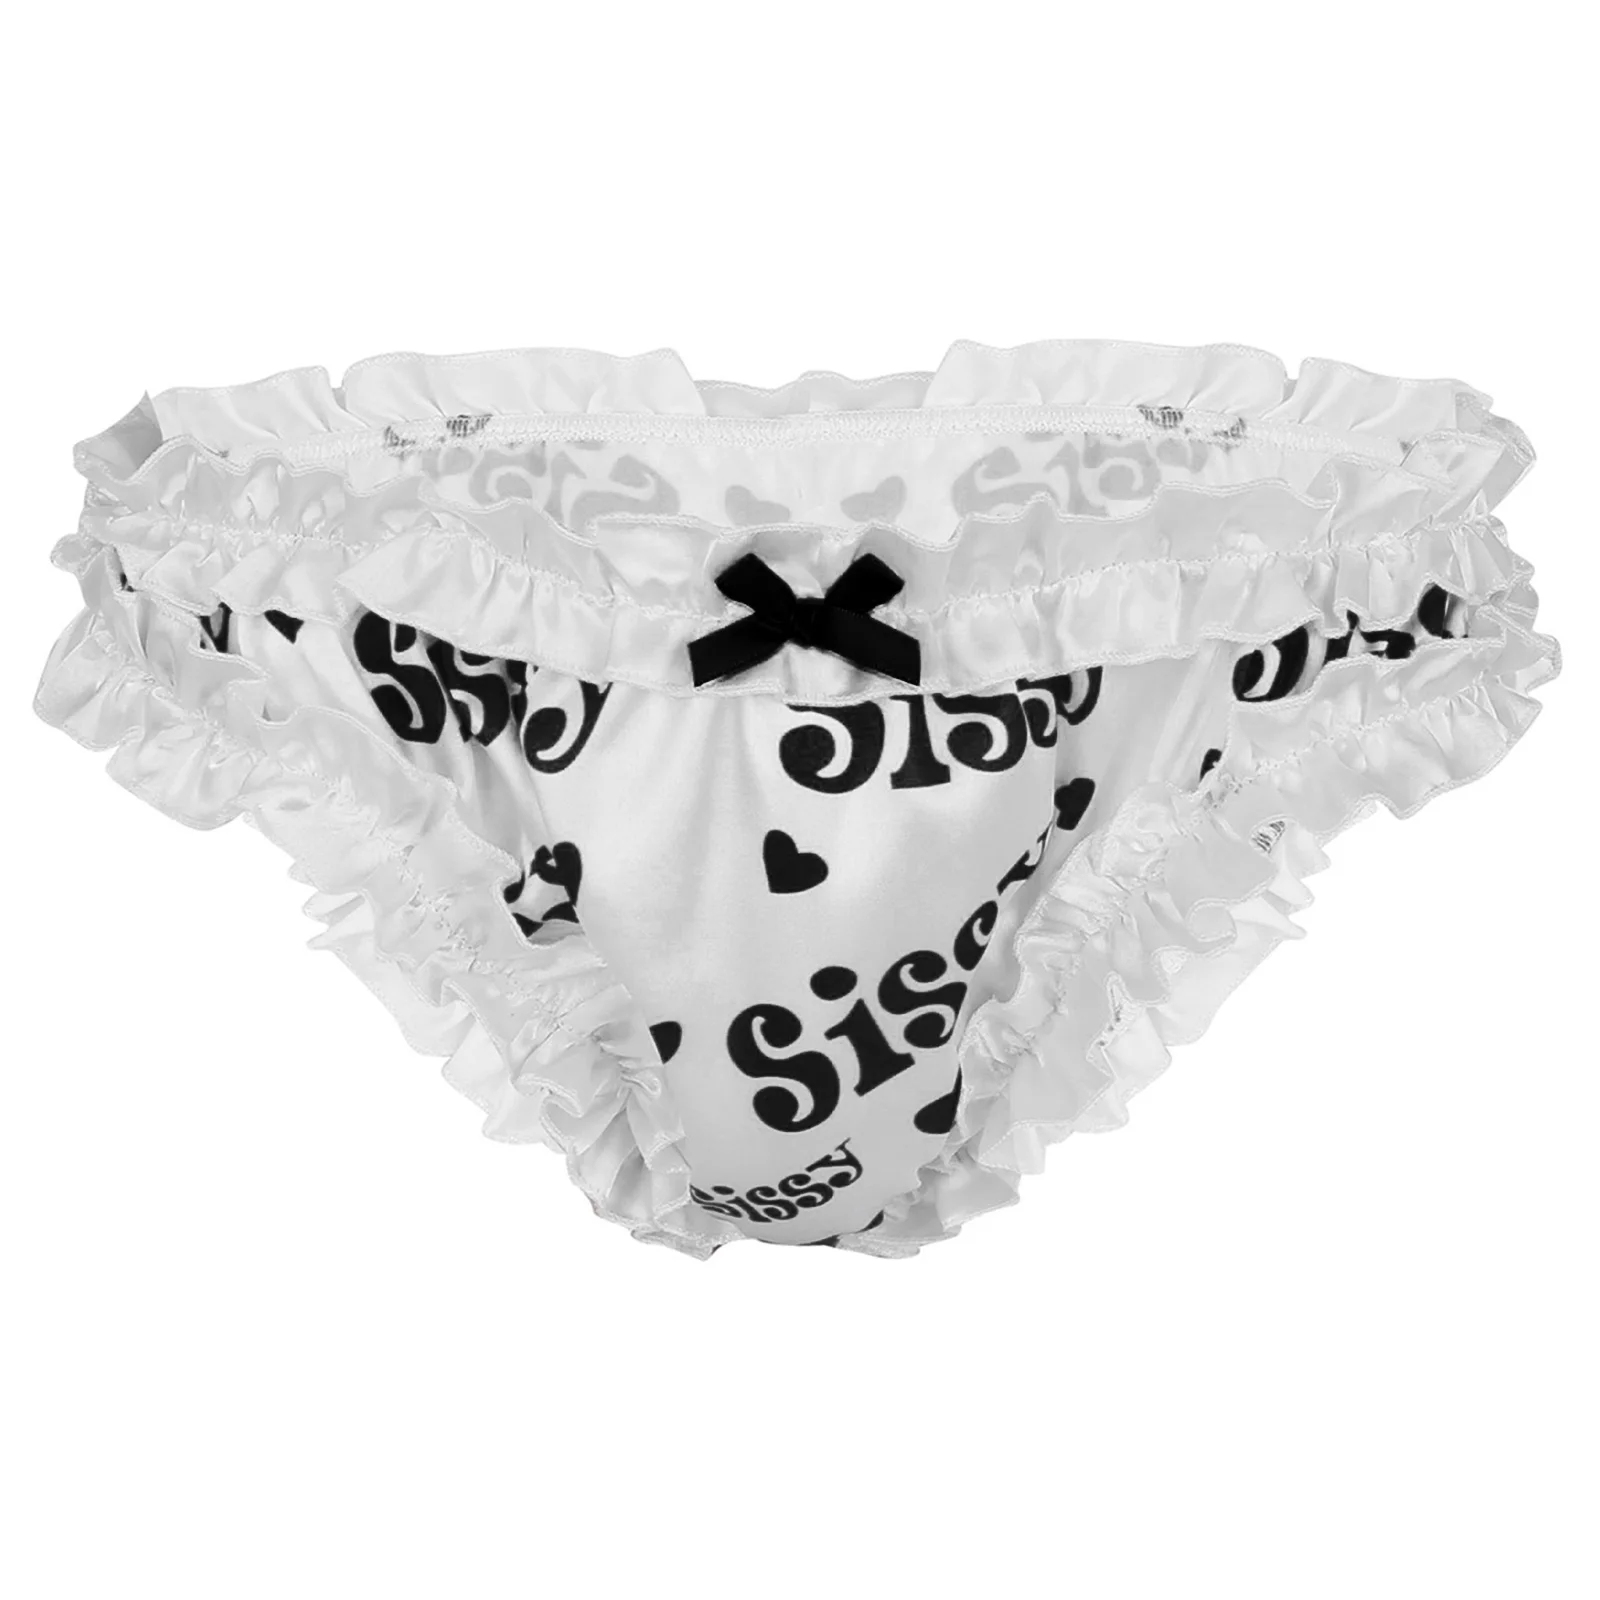 

Mens Lingerie Sissy Panties Super Frilly Ruffled High Cut Sissy Knickers Bloomers Gay Male Erotic Sissy Briefs Underwear